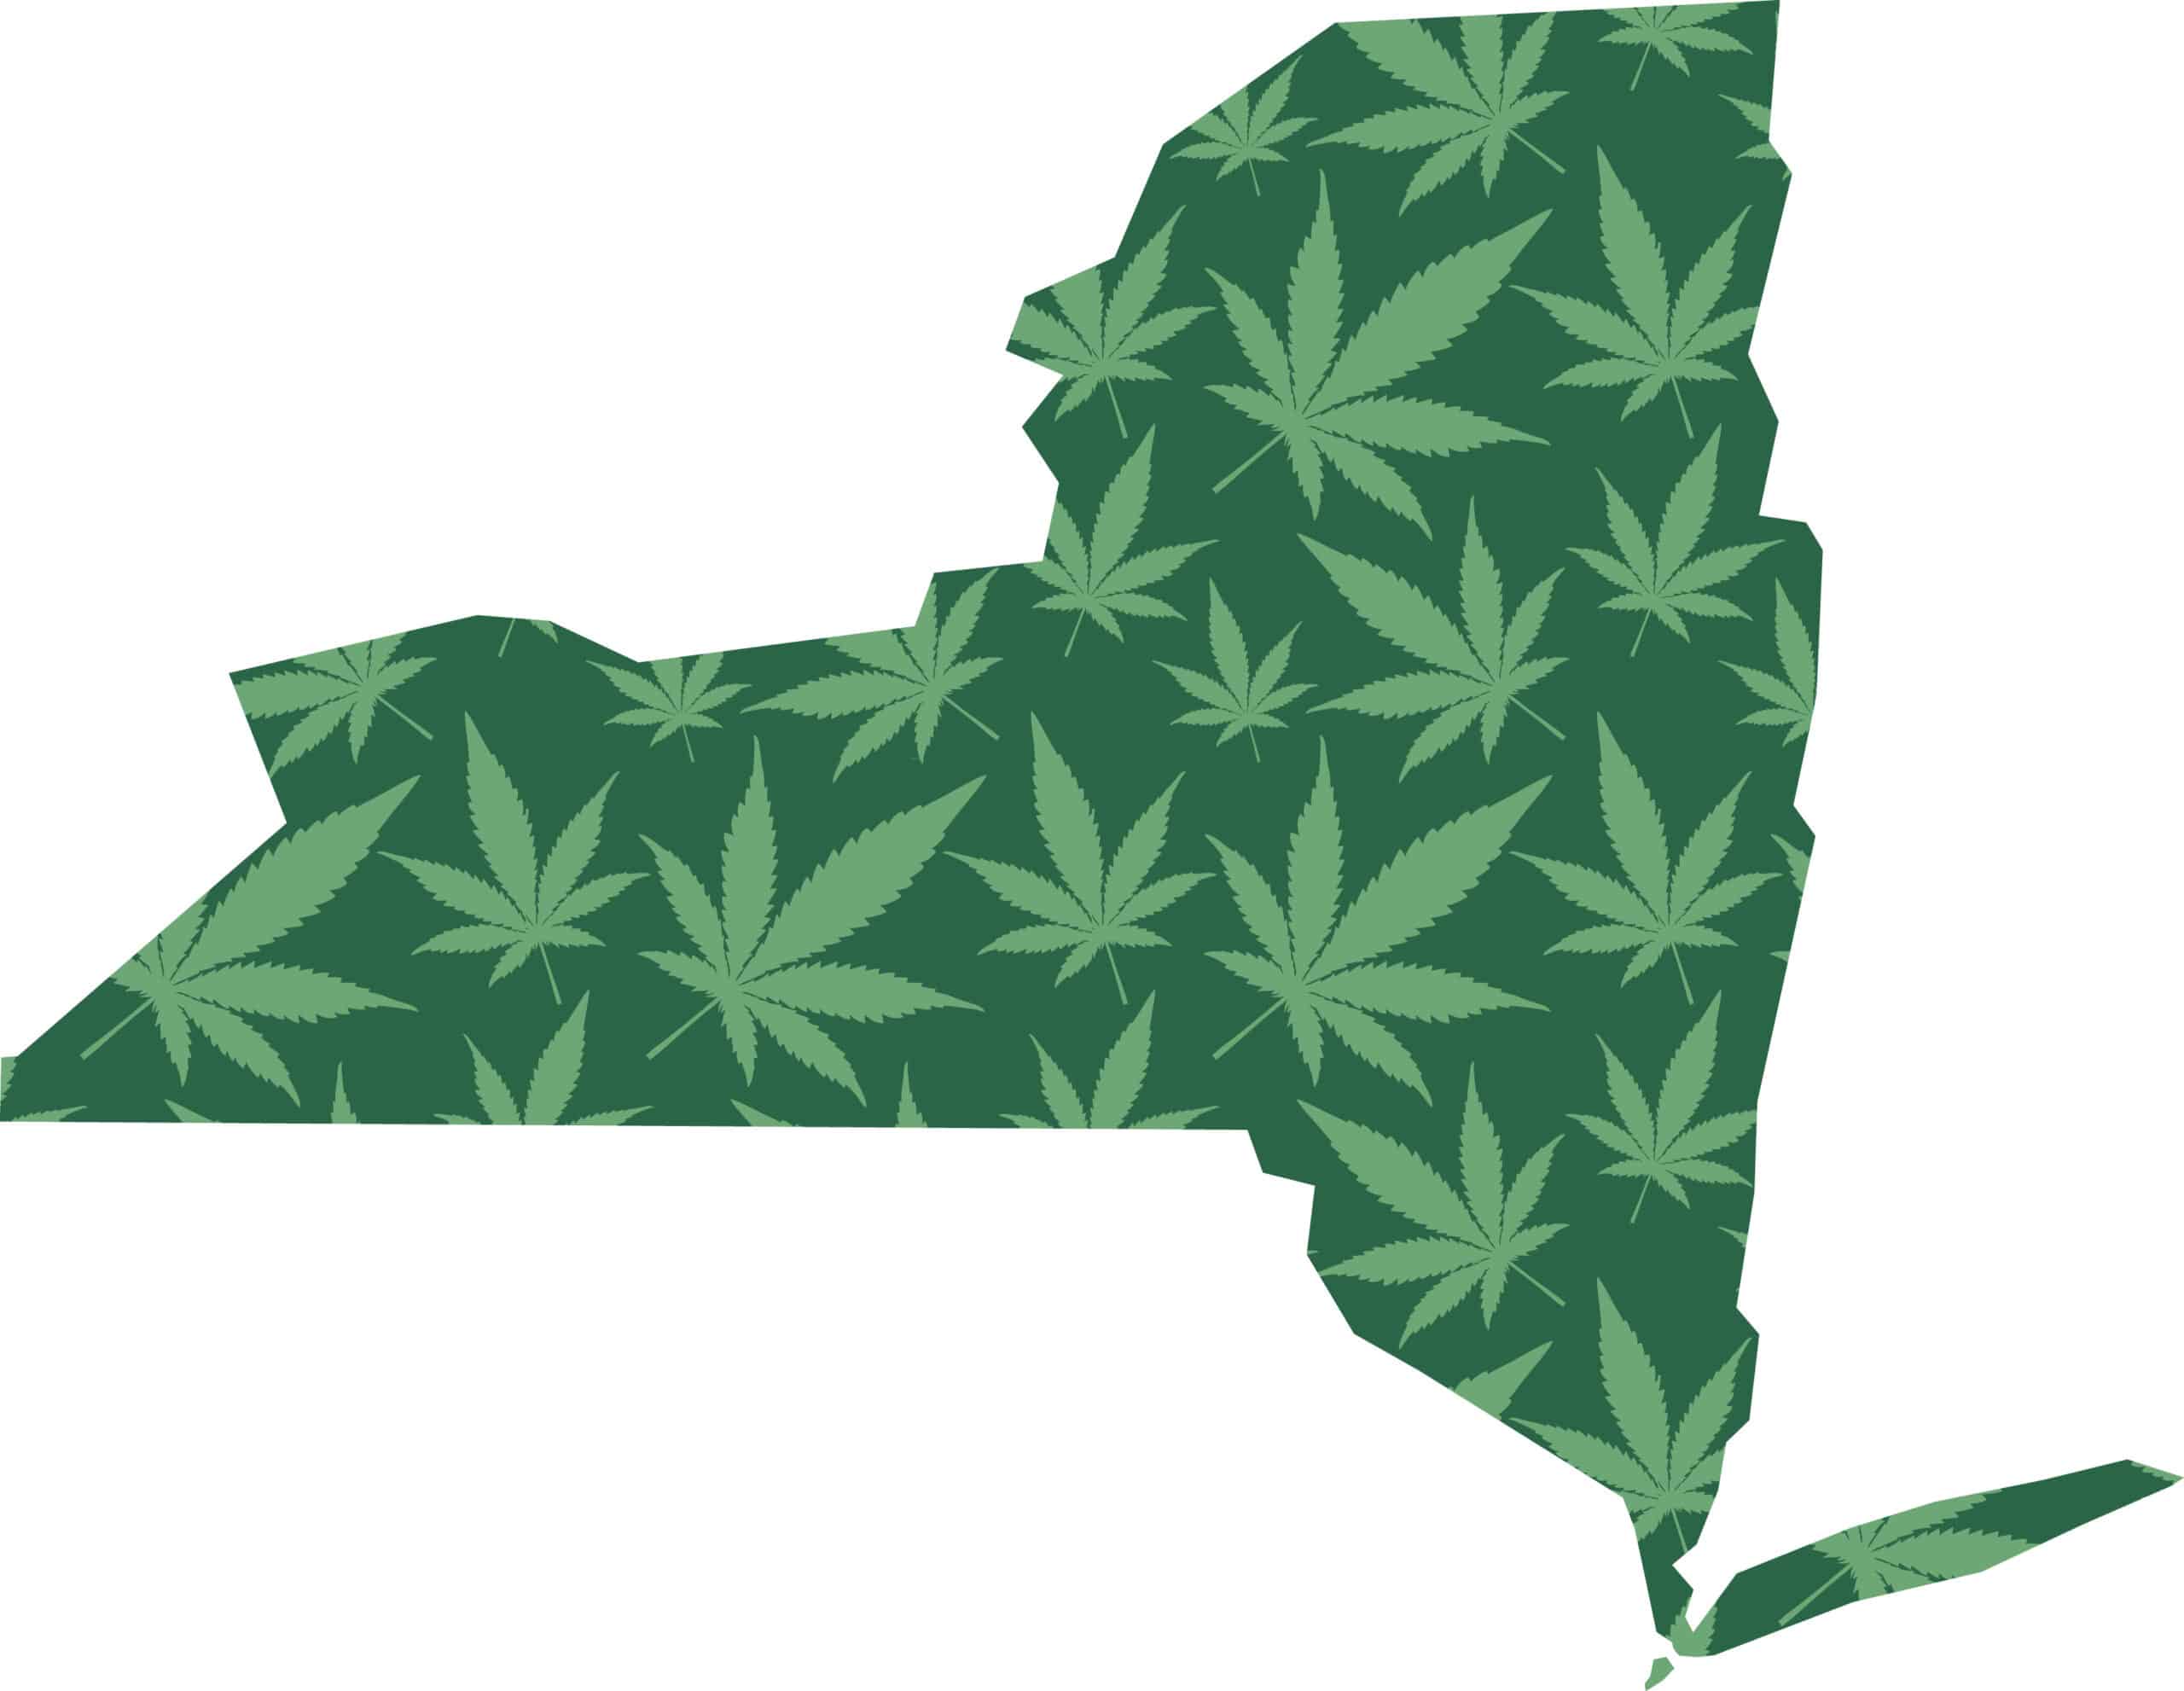 New York Marijuana Leaves Pattern